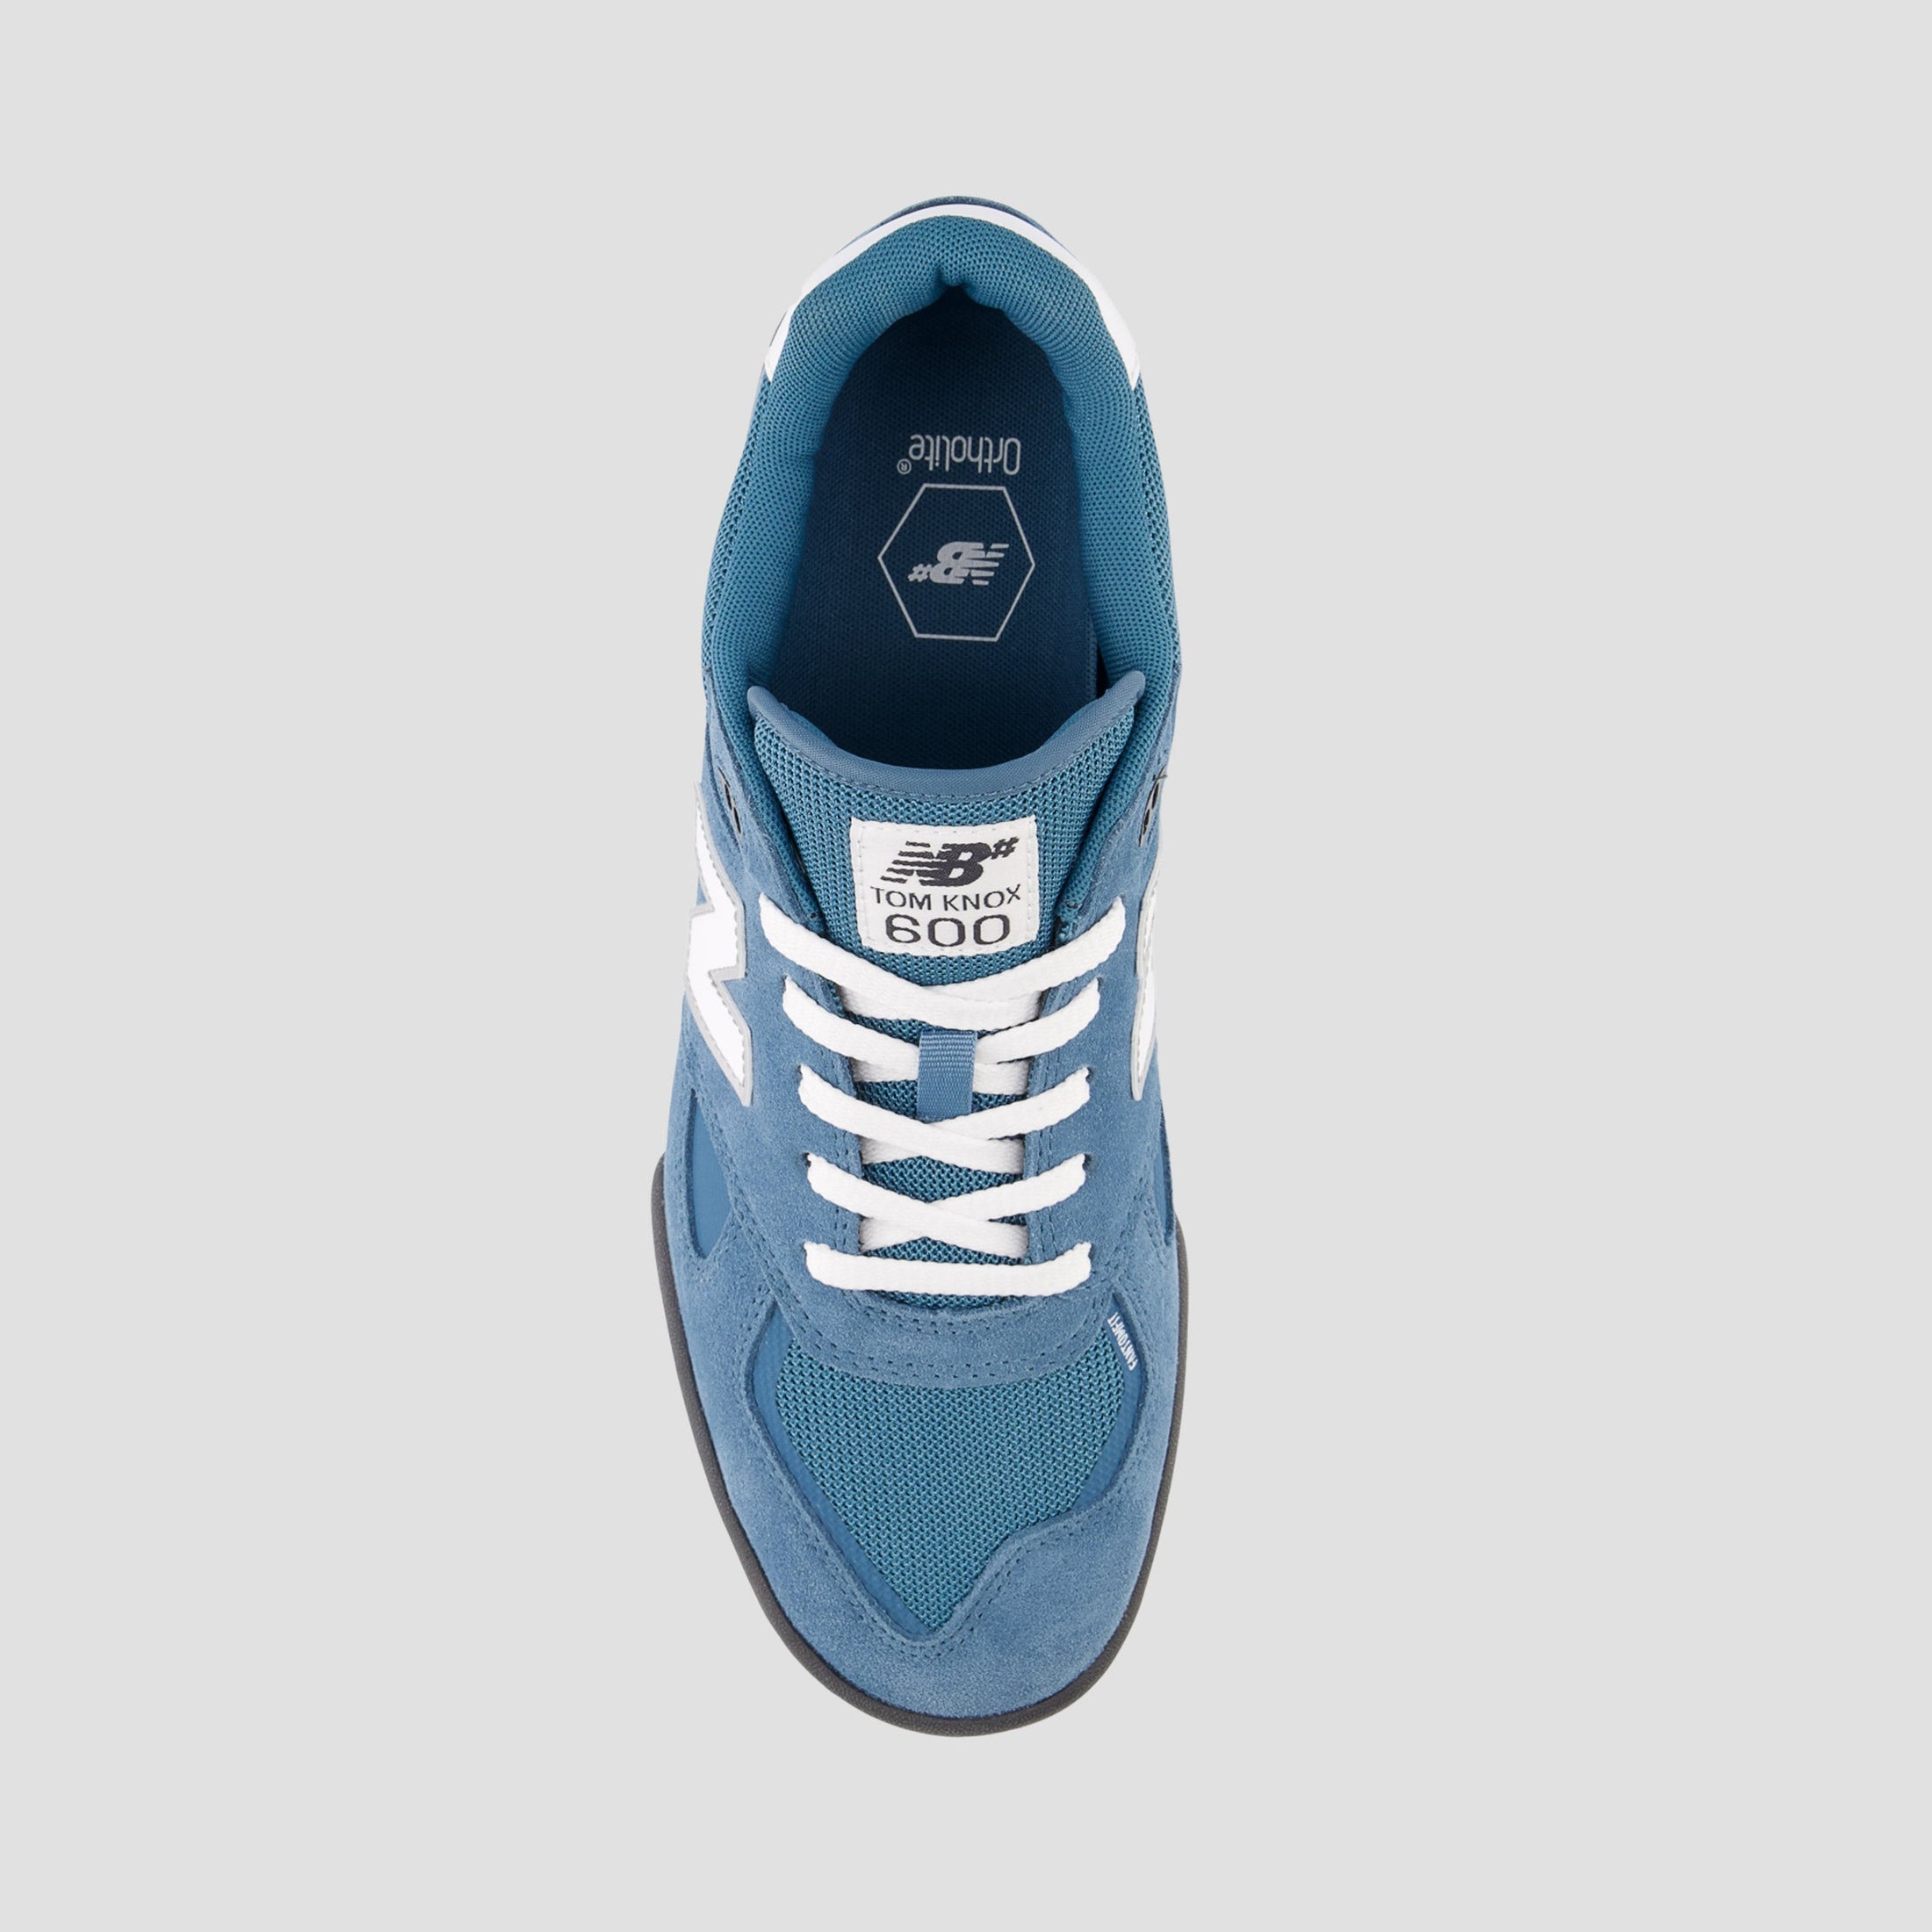 New Balance 600 Tom Knox Skate Shoes Elemental Blue / White